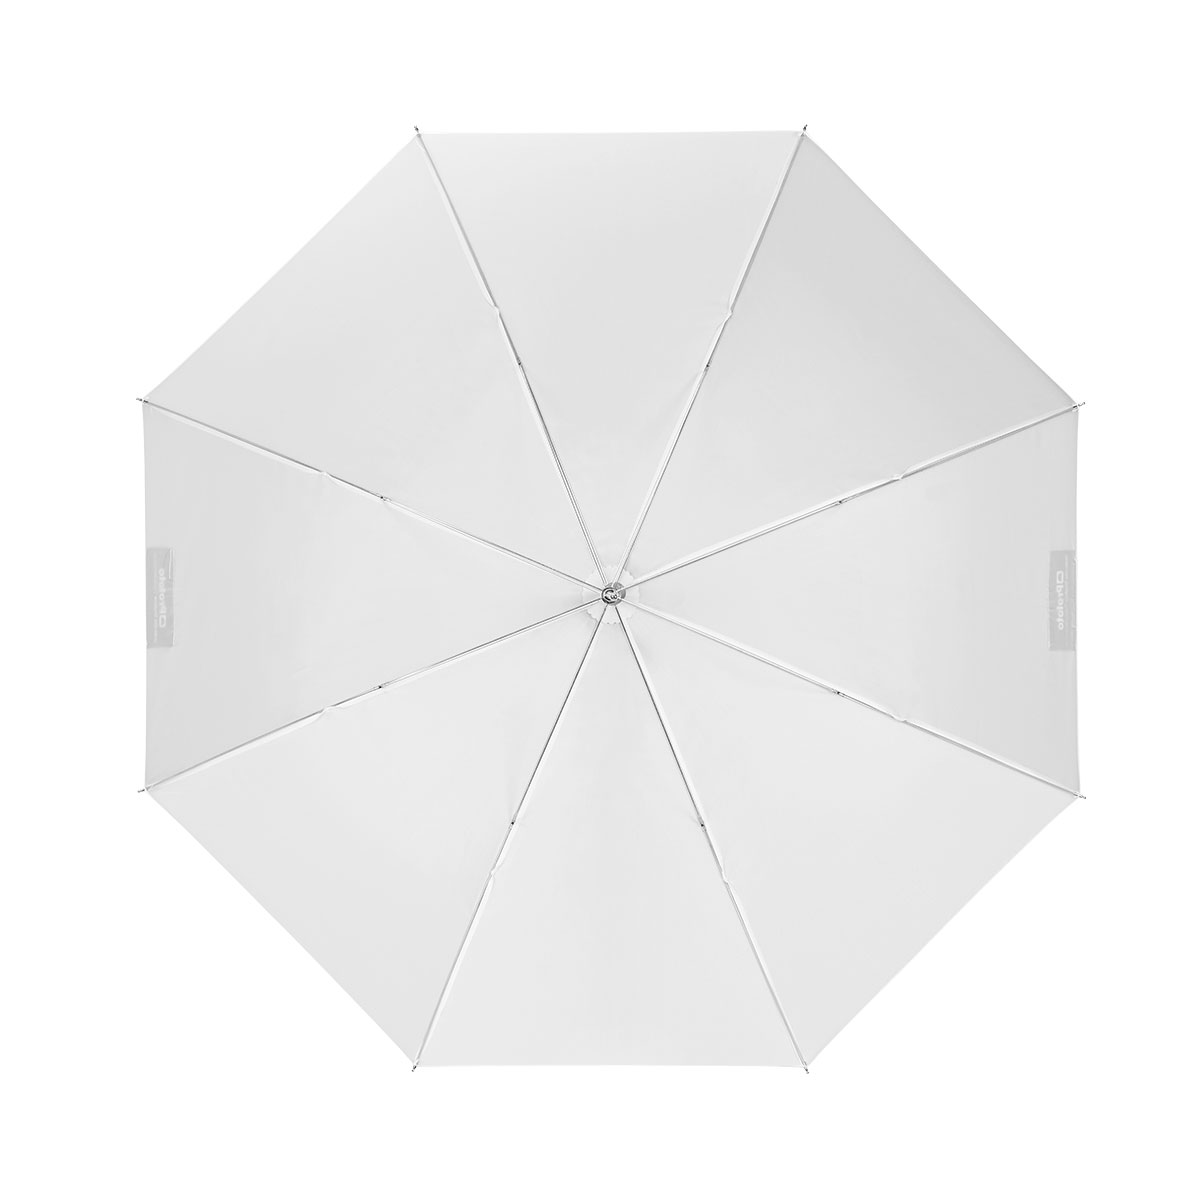 Umbrella_Shallow_Translucent_S